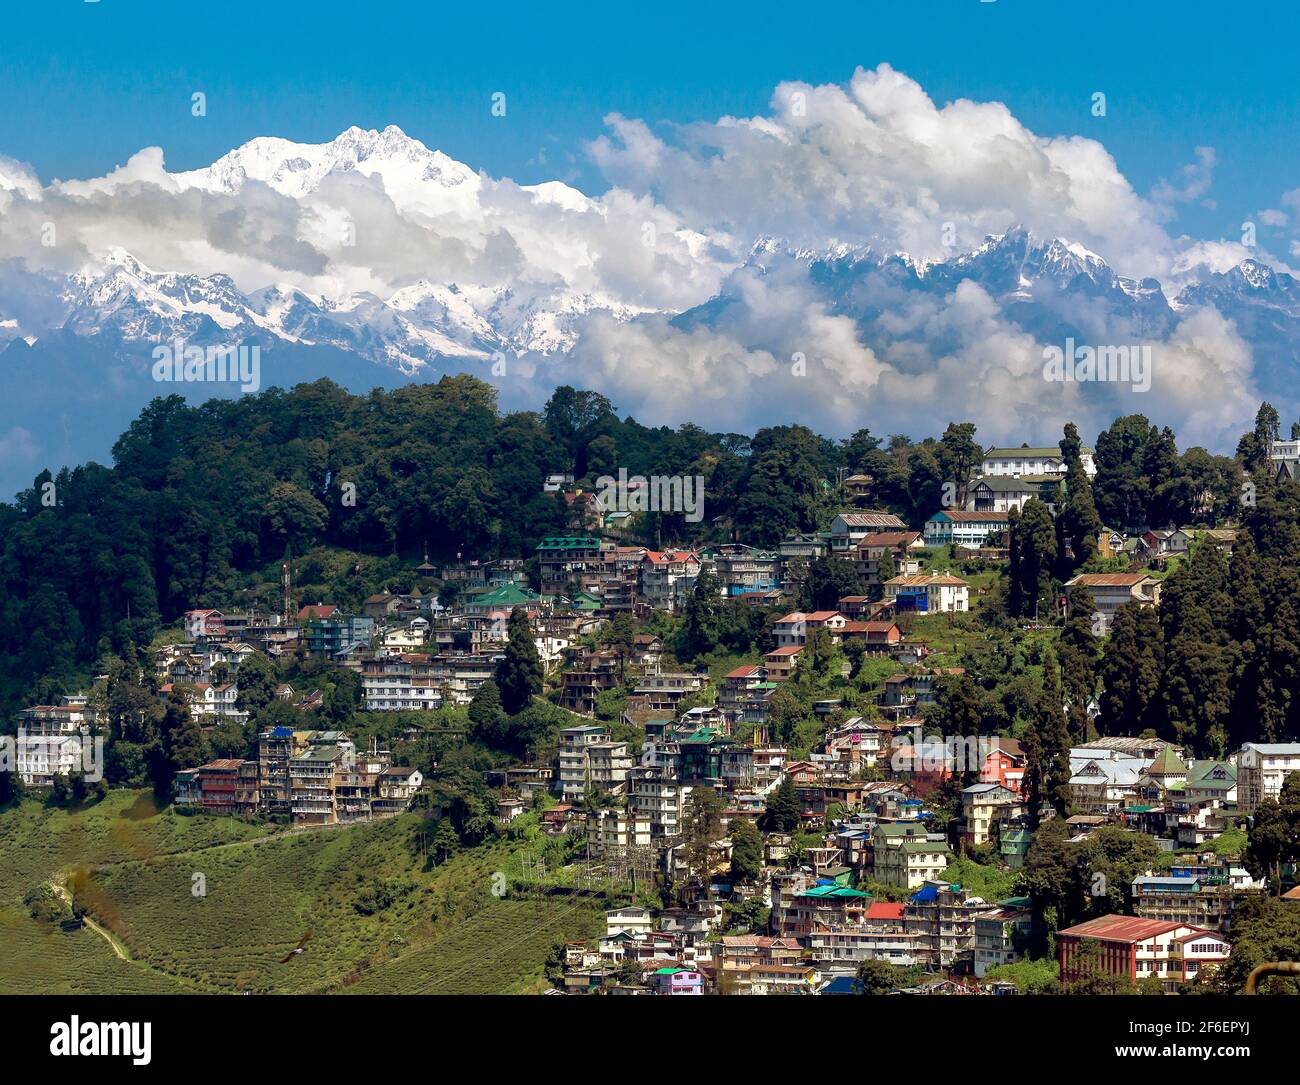 Panoramic view of mount Kanchengjunga, Darjeeling in the foreground. India Stock Photo